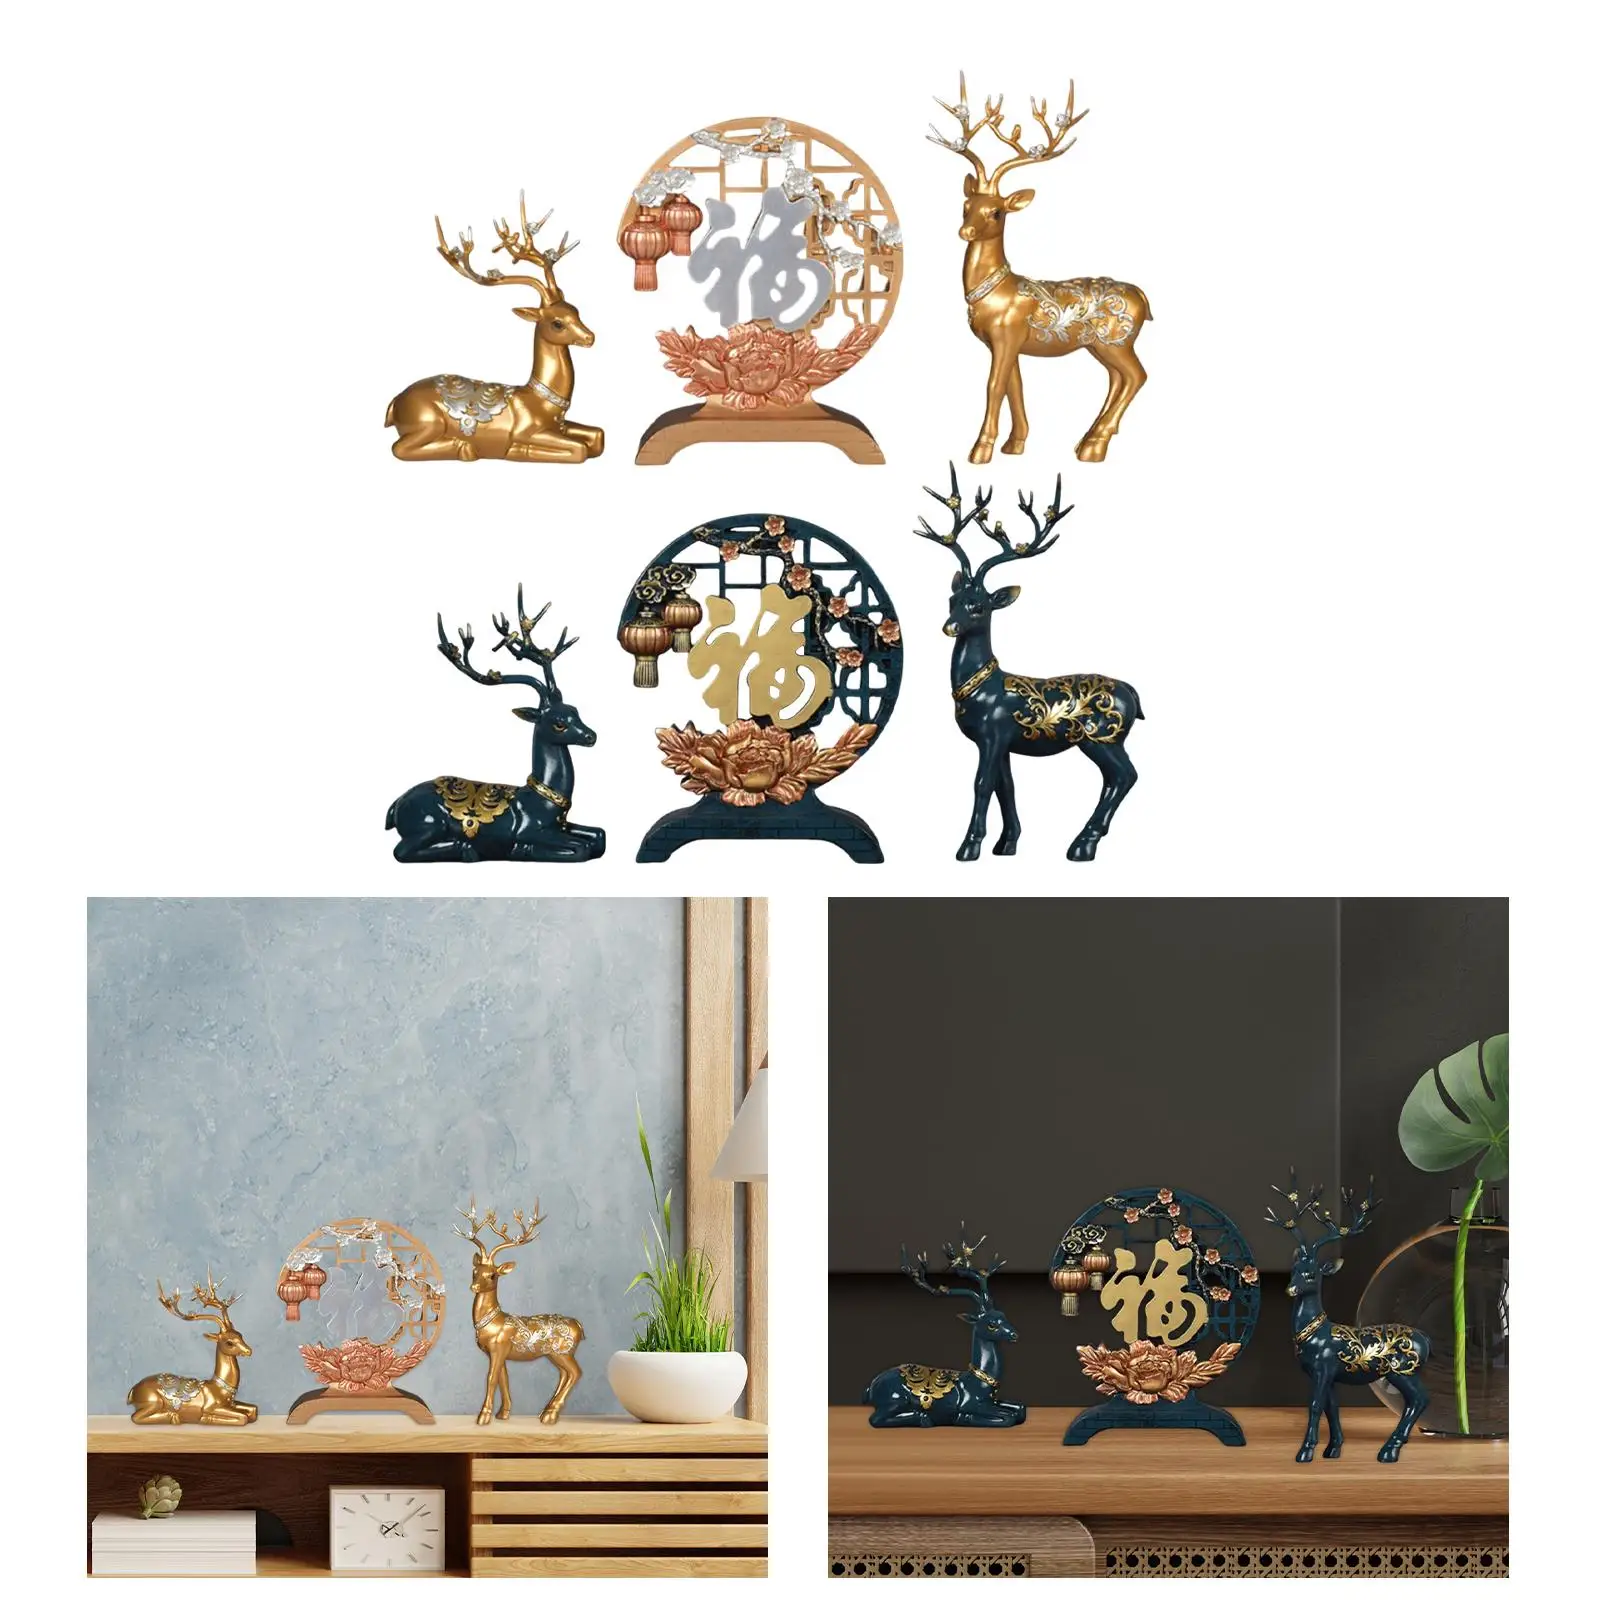 3Pcs/Set Deer Statues Modern Fu Character Plate Reindeer Figurines for Home Tabletop Cabinet Living Room Decor